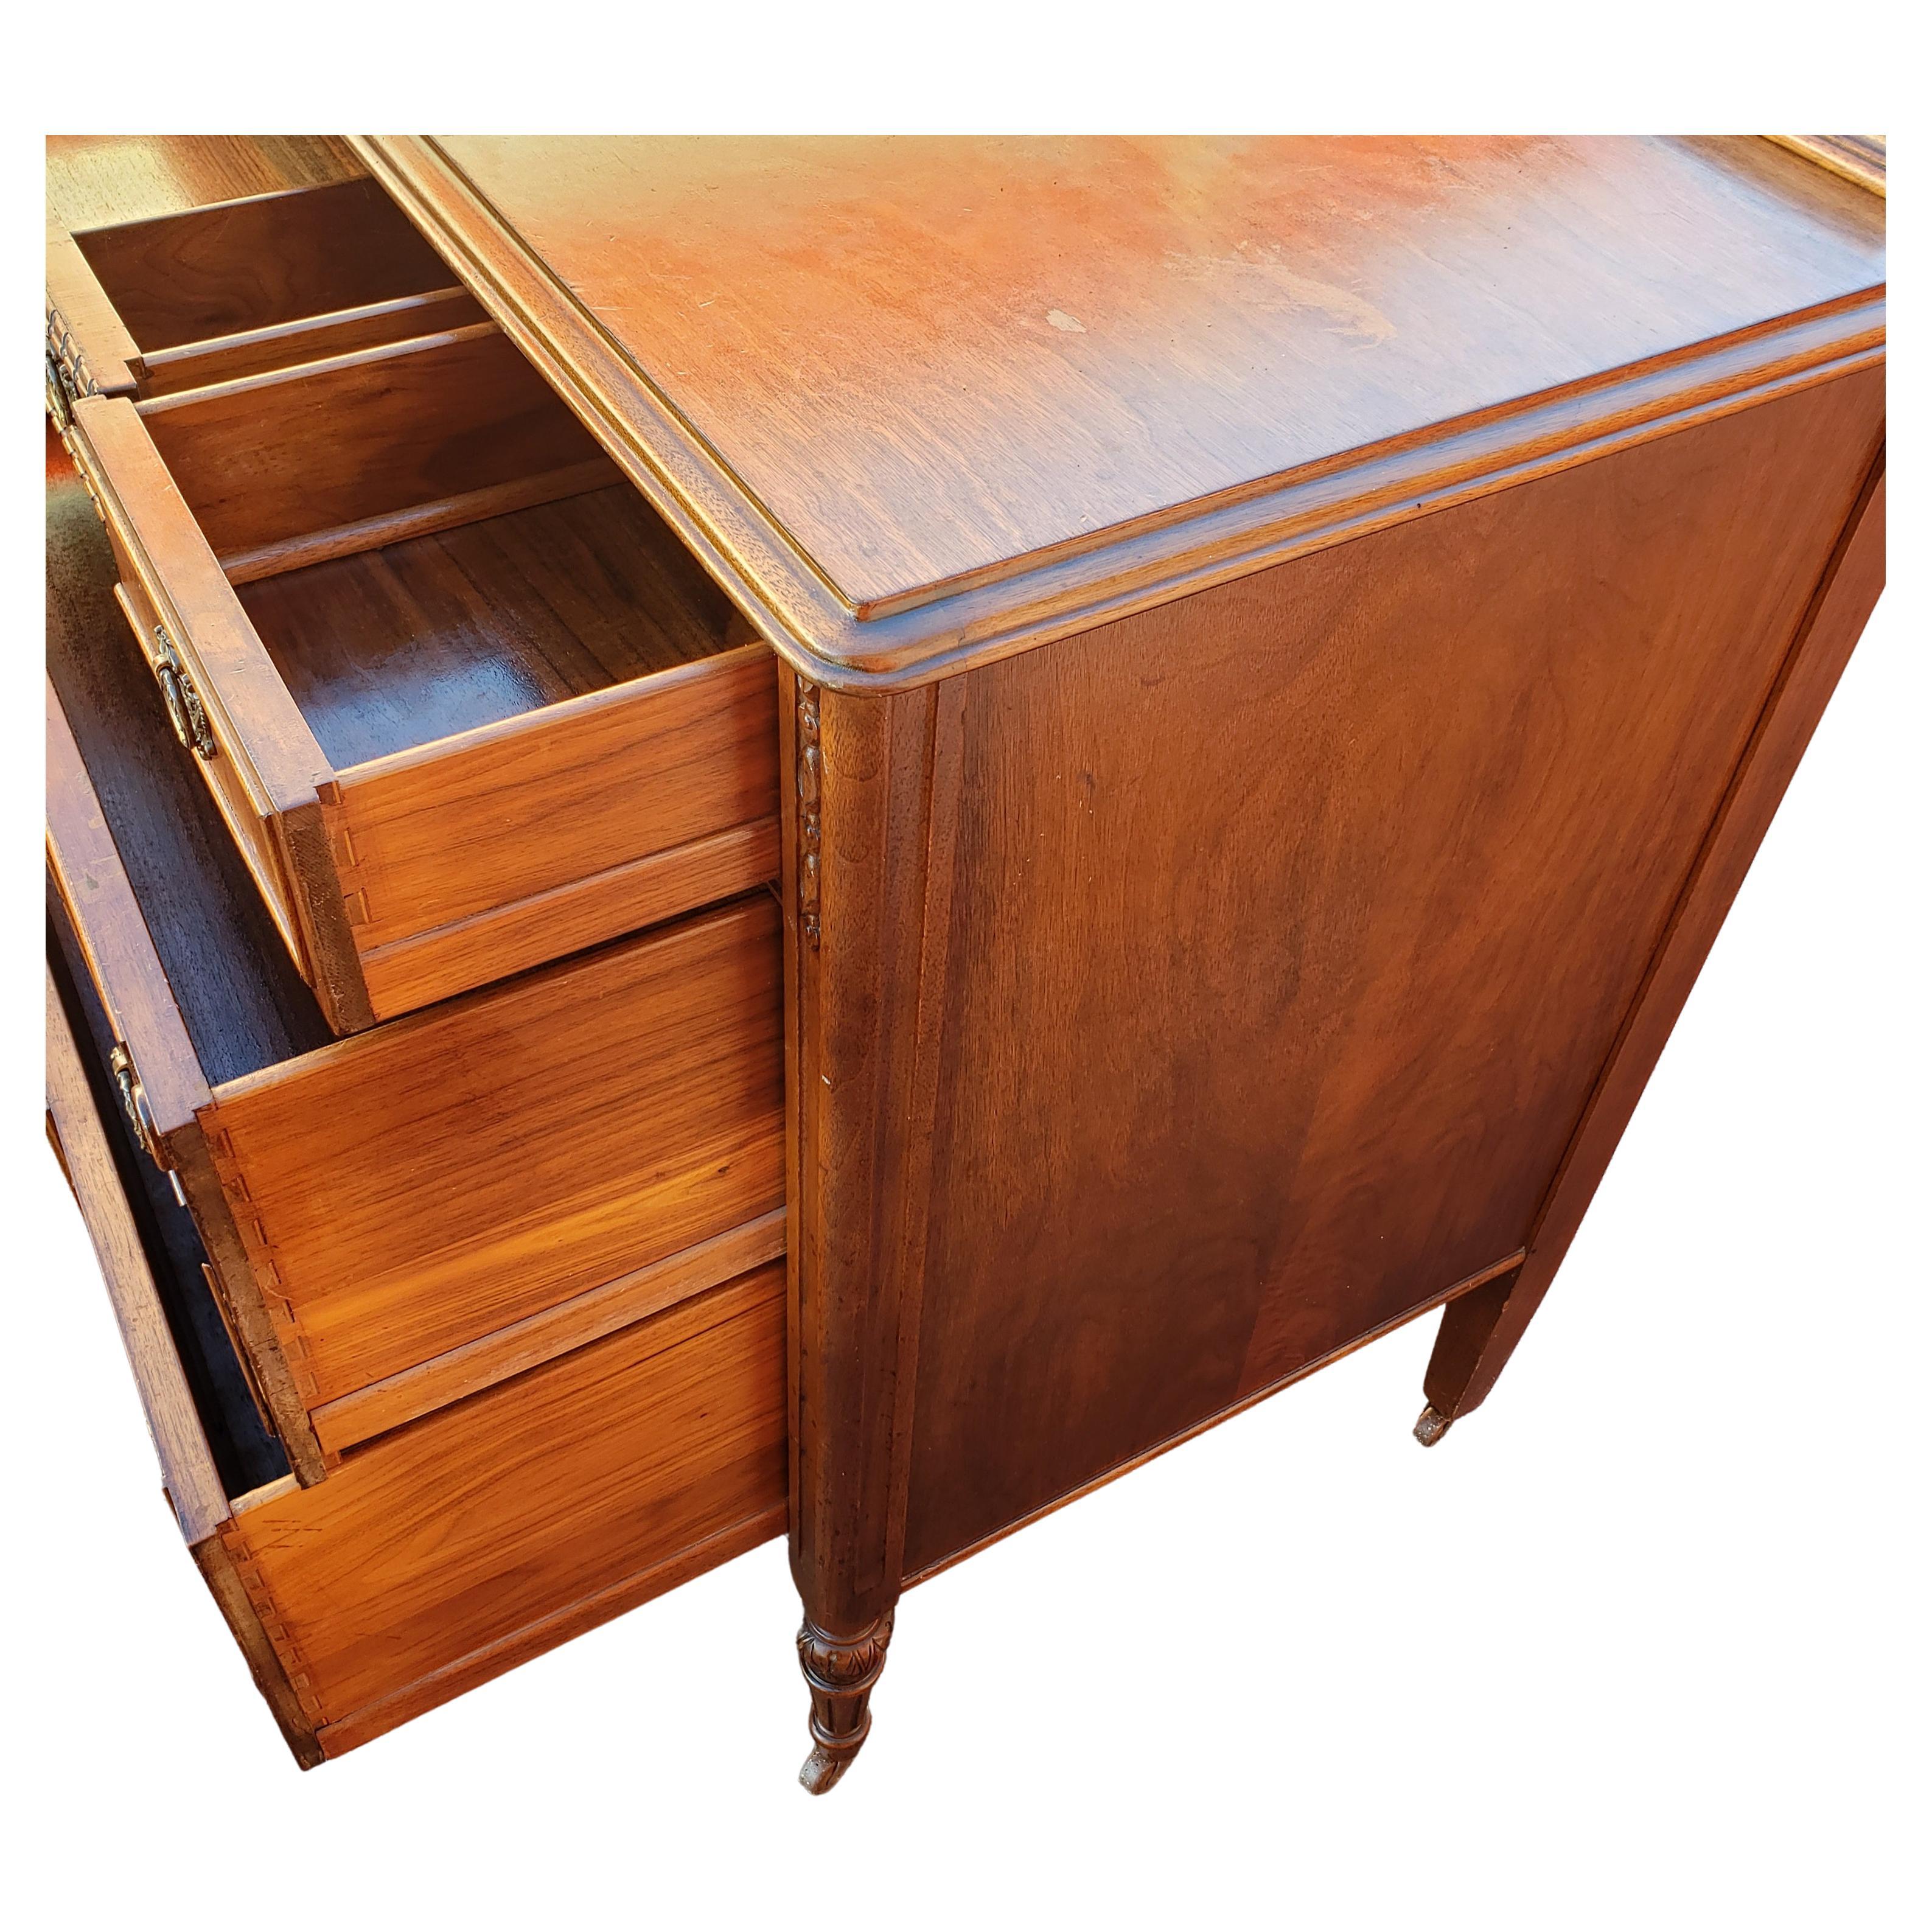 Other Phenix Furniture Renaissance Revival Walnut Dresser with Mirror, circa 1910s